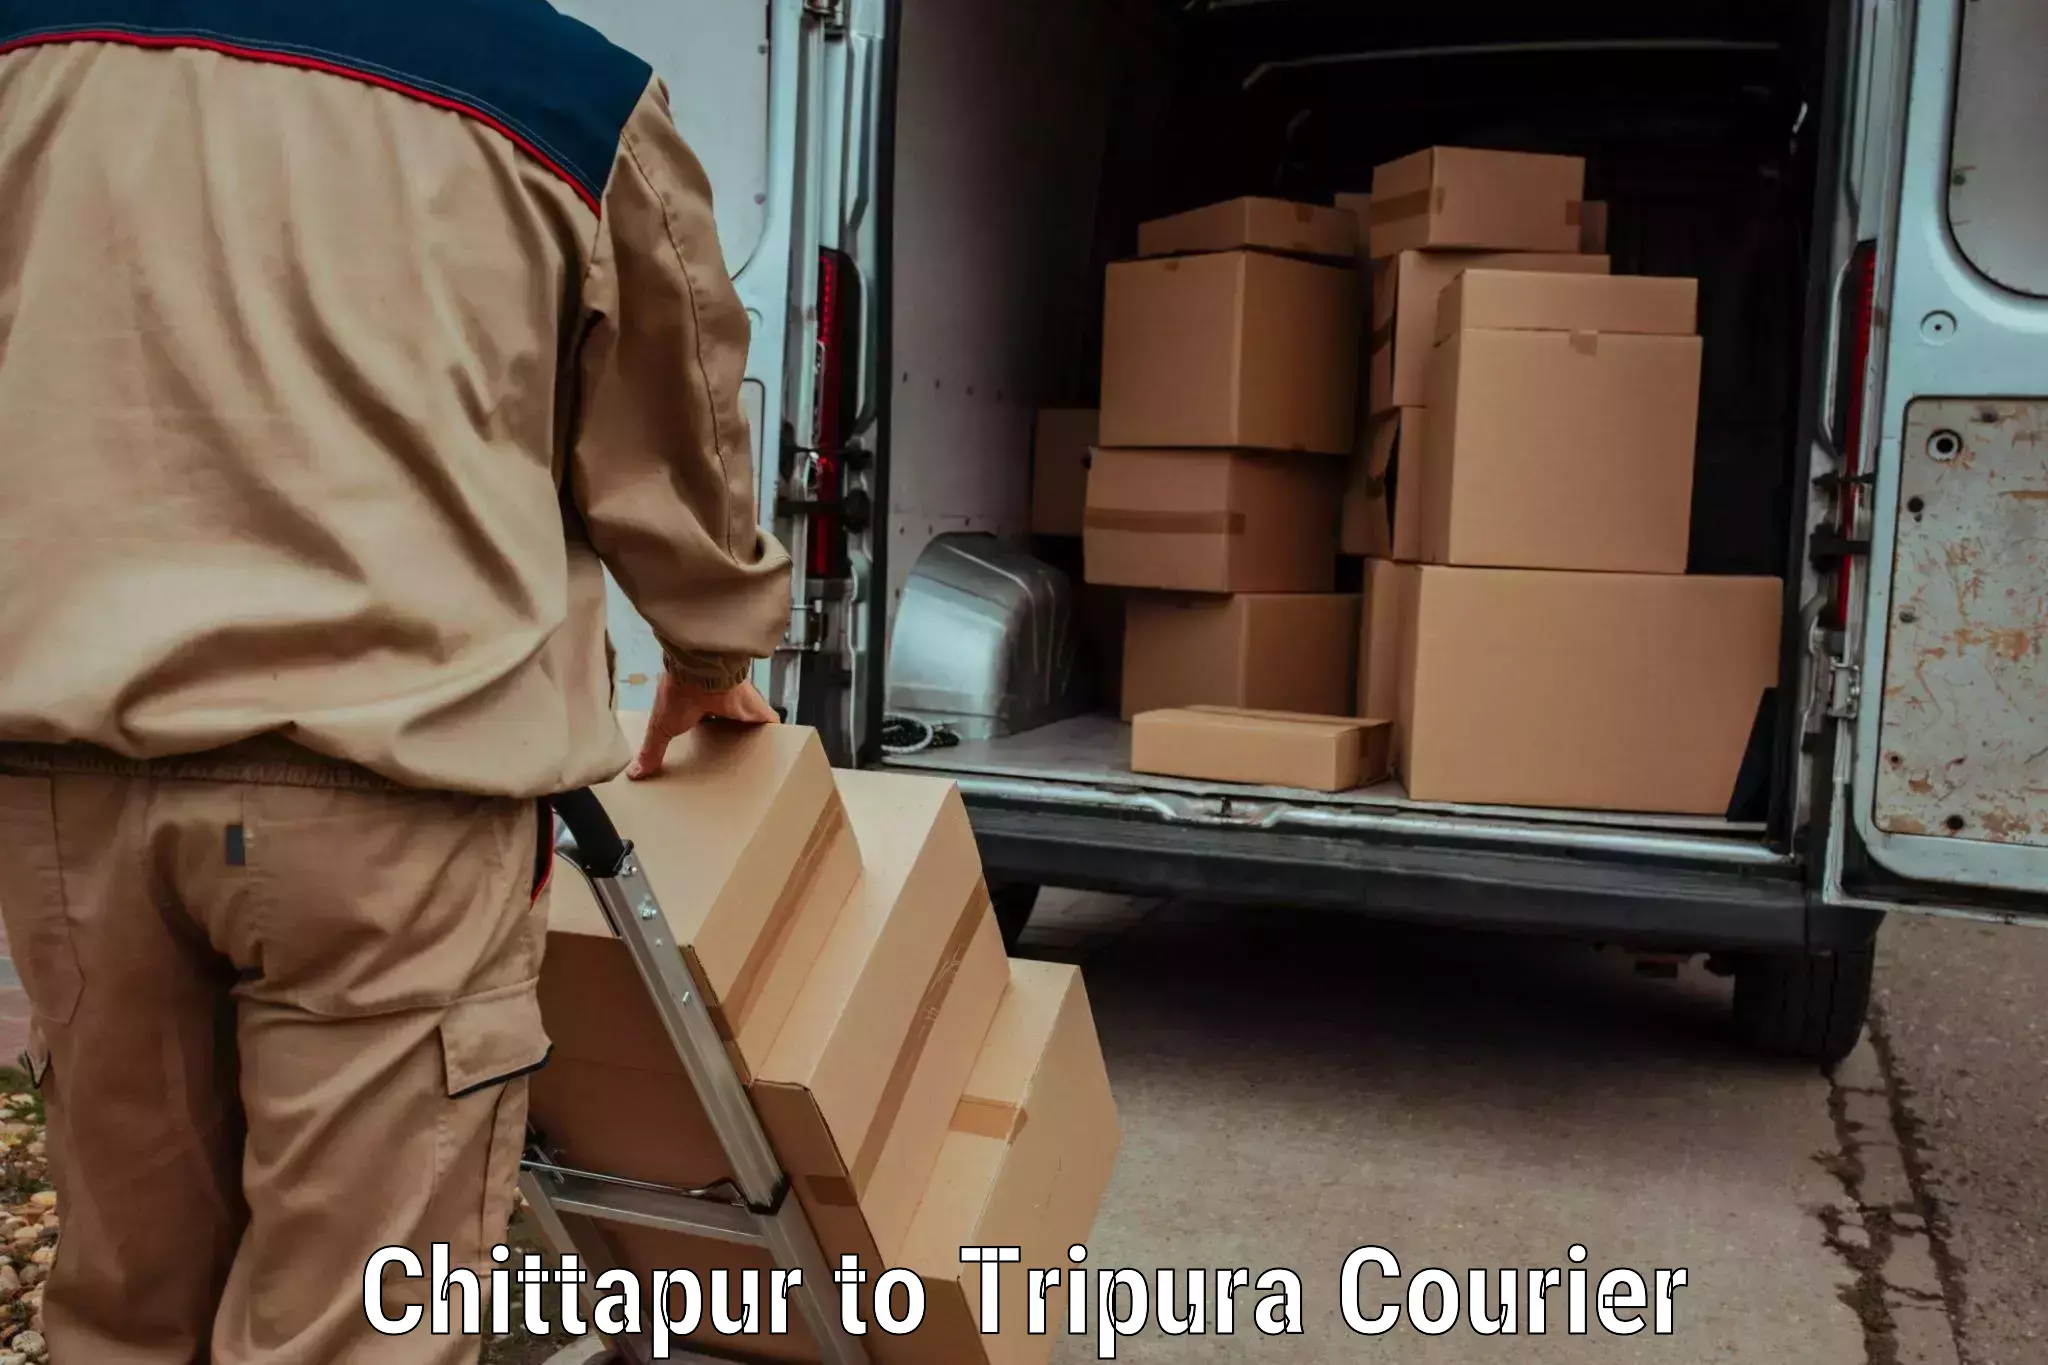 Same day luggage service Chittapur to Tripura